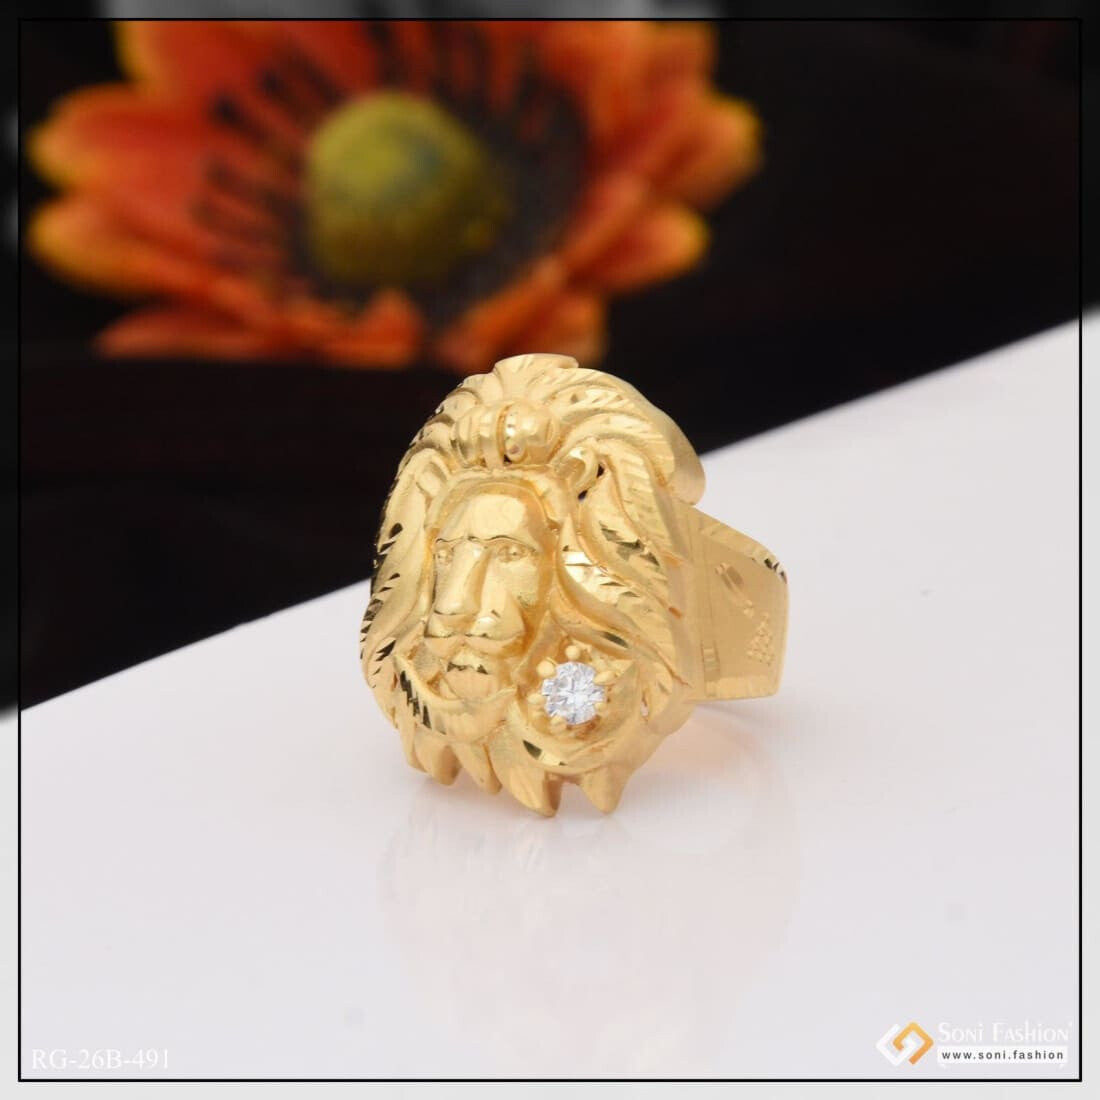 Buy Avsar 18k (750) Yellow Gold and Diamond Ring for Men at Amazon.in